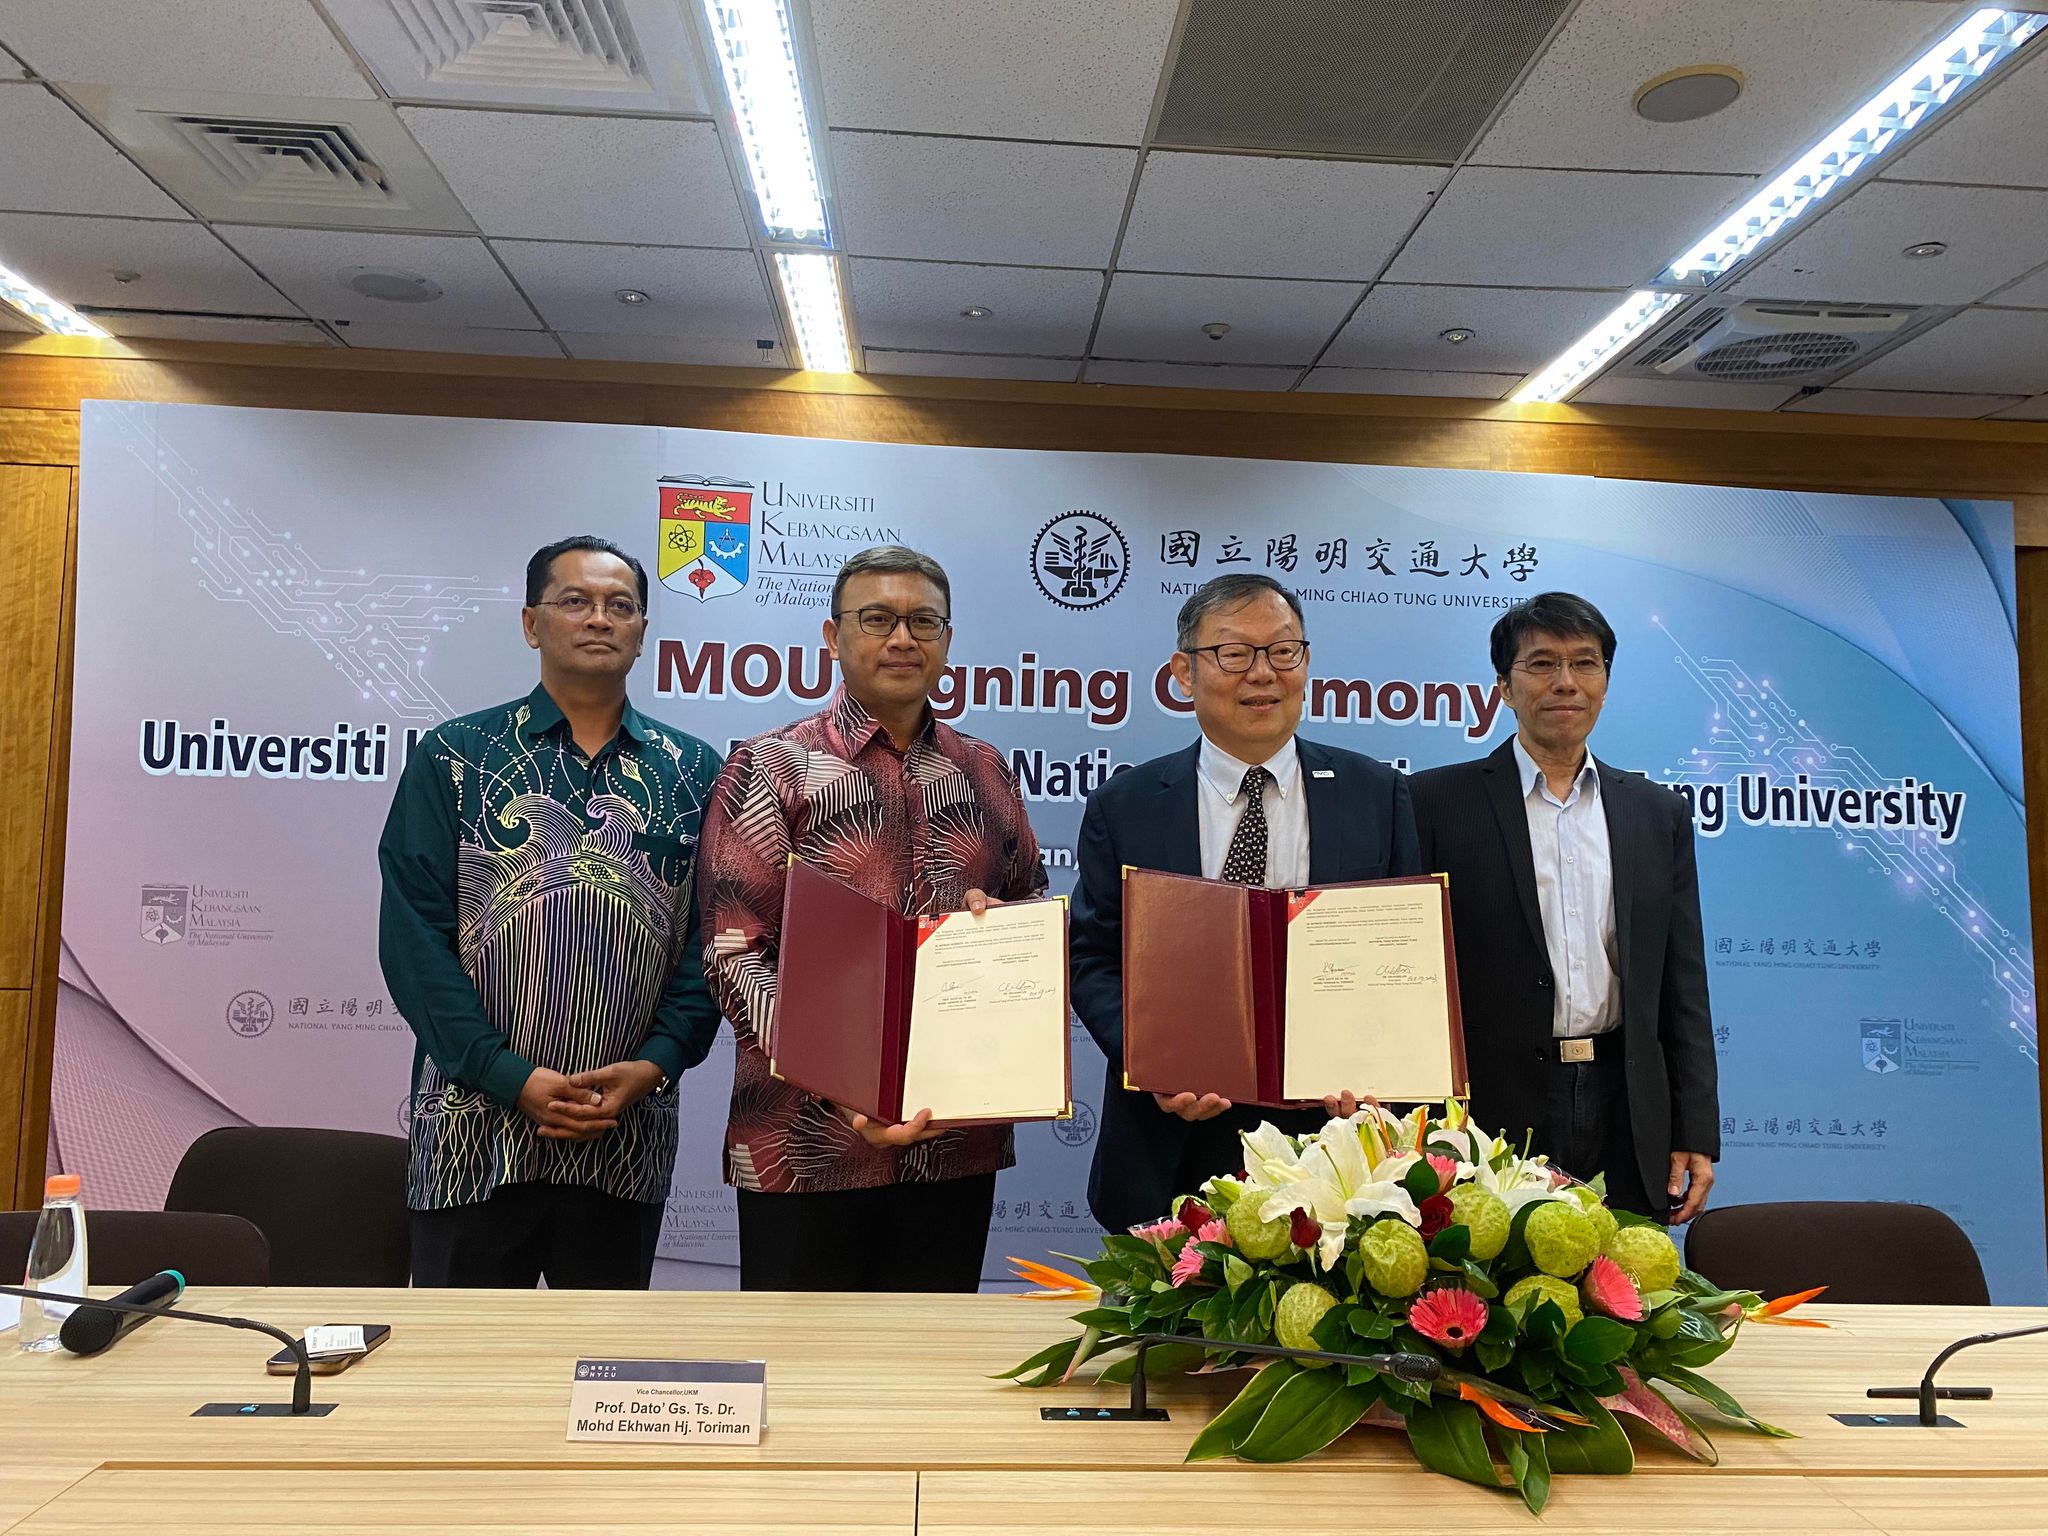 MOU Signing Ceremony between National Yang Ming Chiao Tung University (NYCU) & Universiti Kebangsaan Malaysia (UKM)'s picture